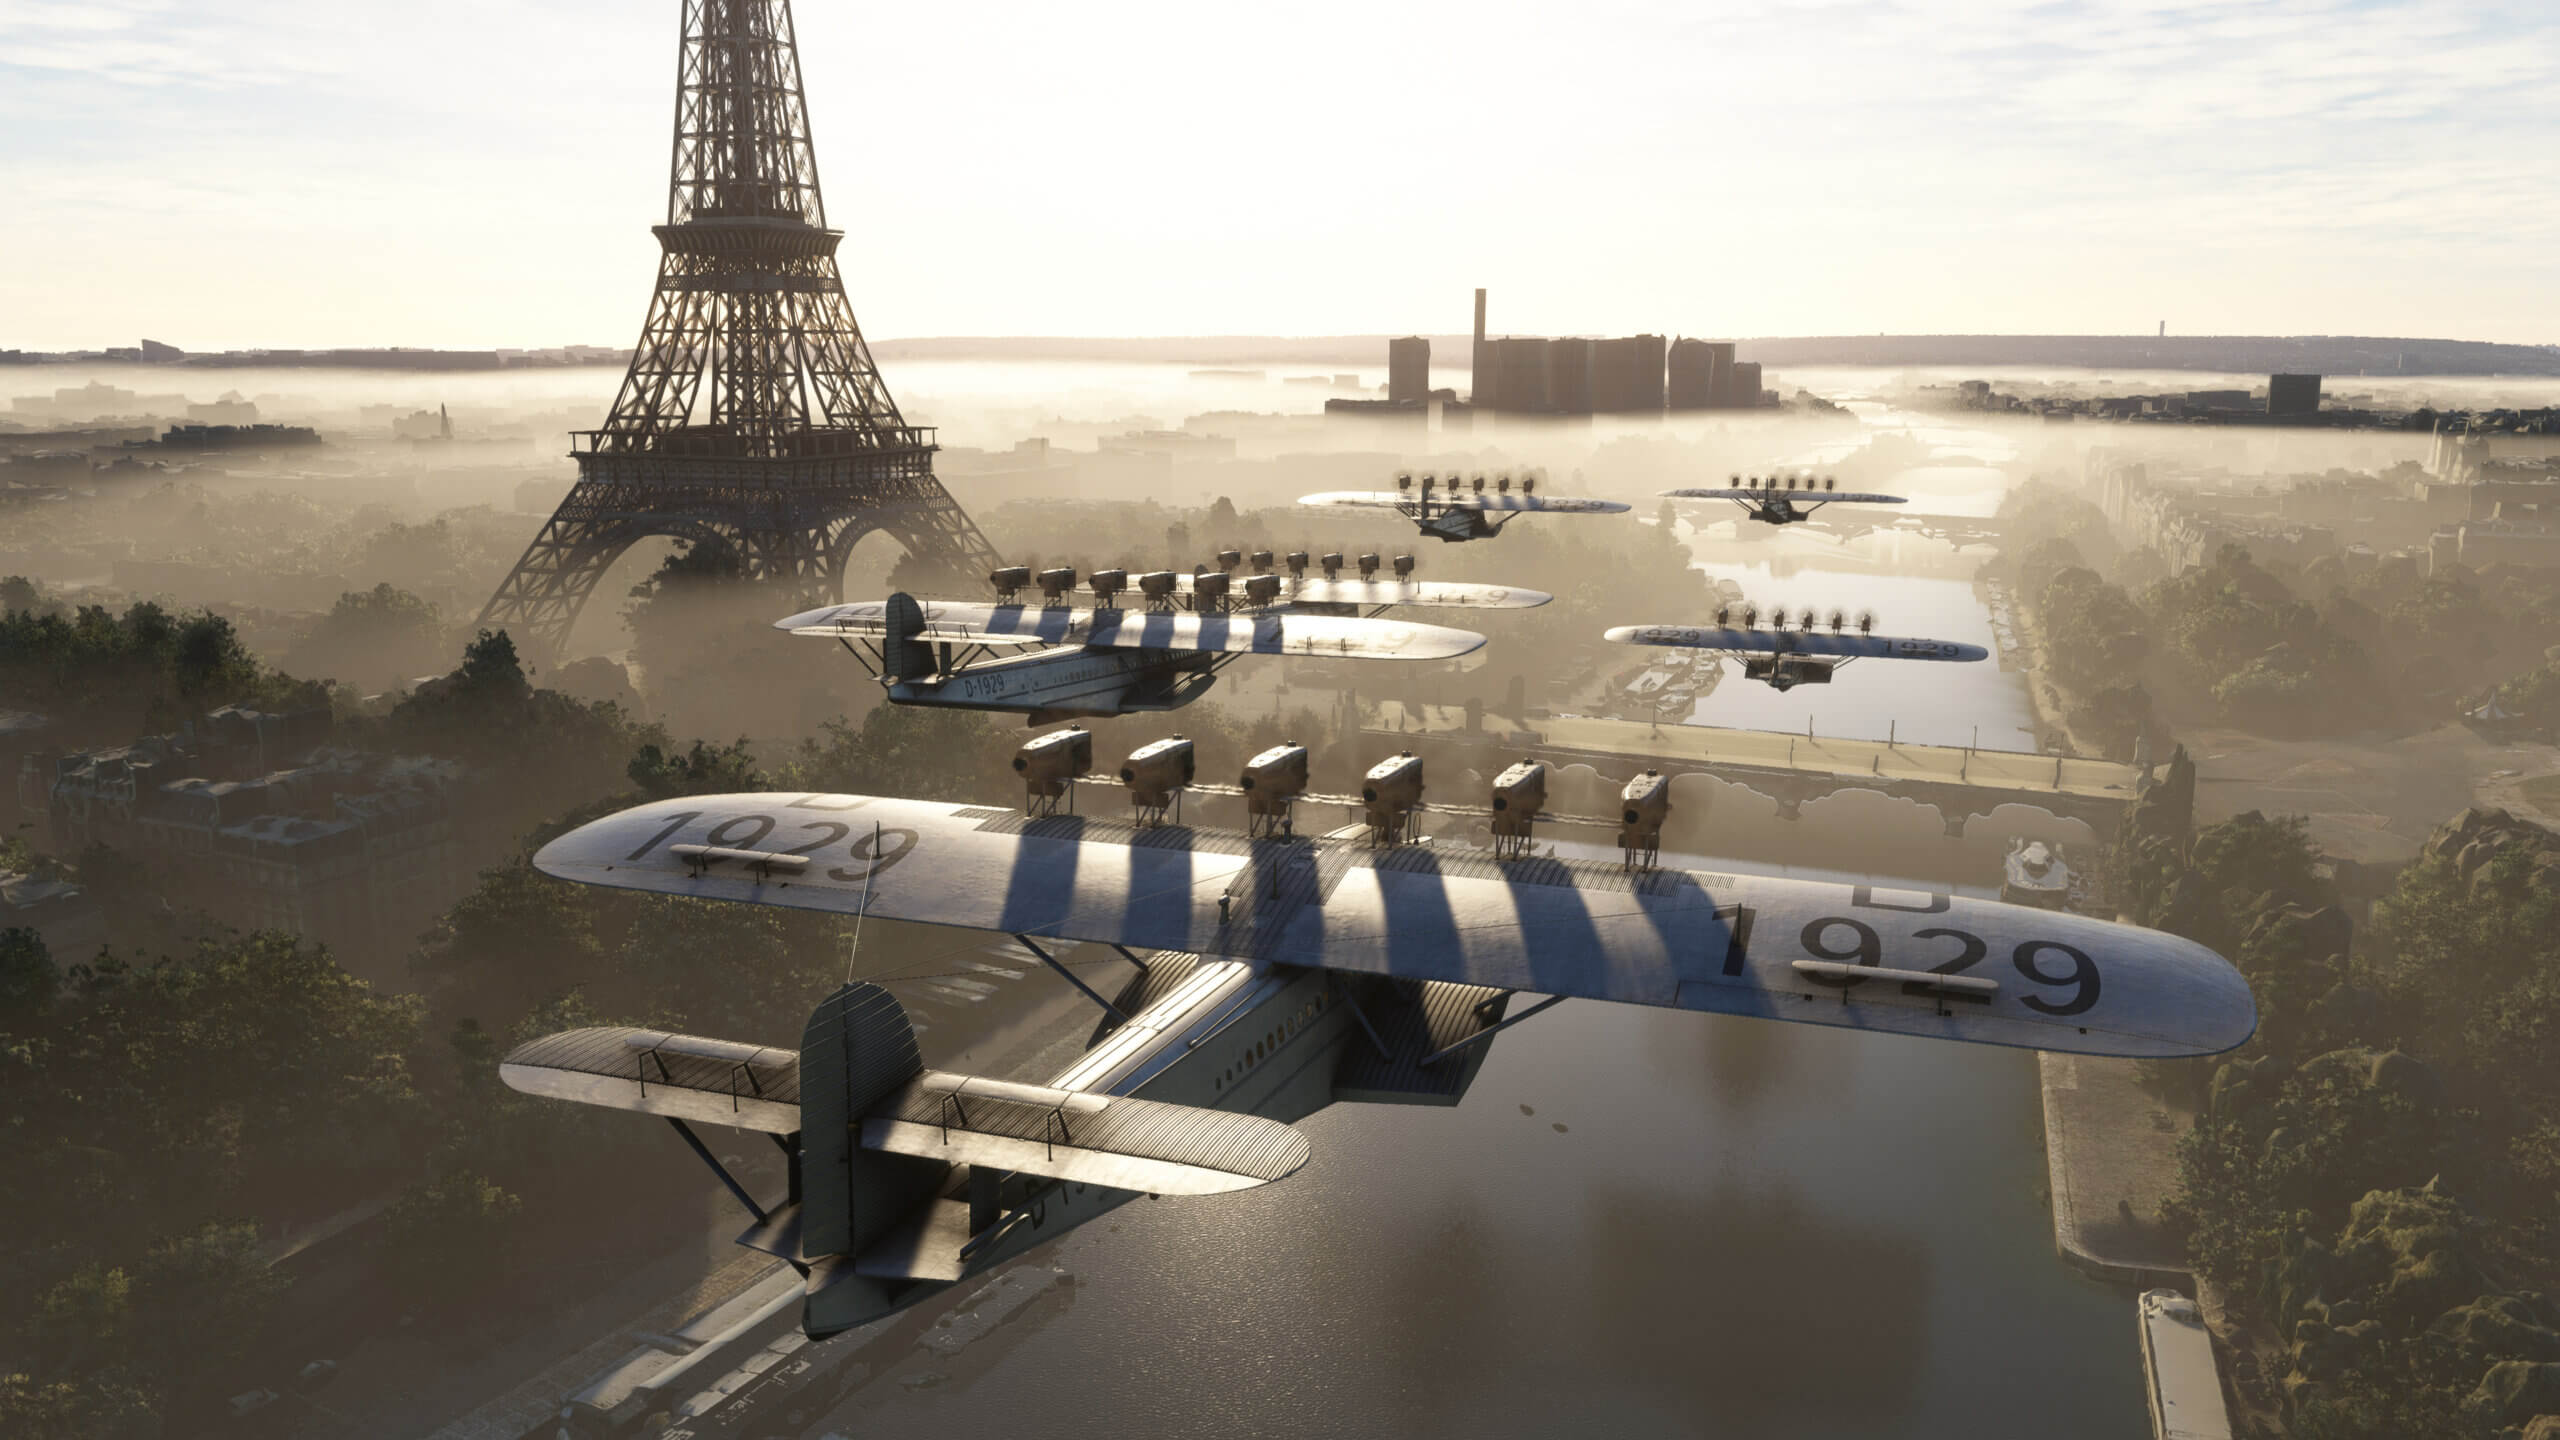 Six Dornier Do X aircraft pass the Eiffel Tower in Paris, France